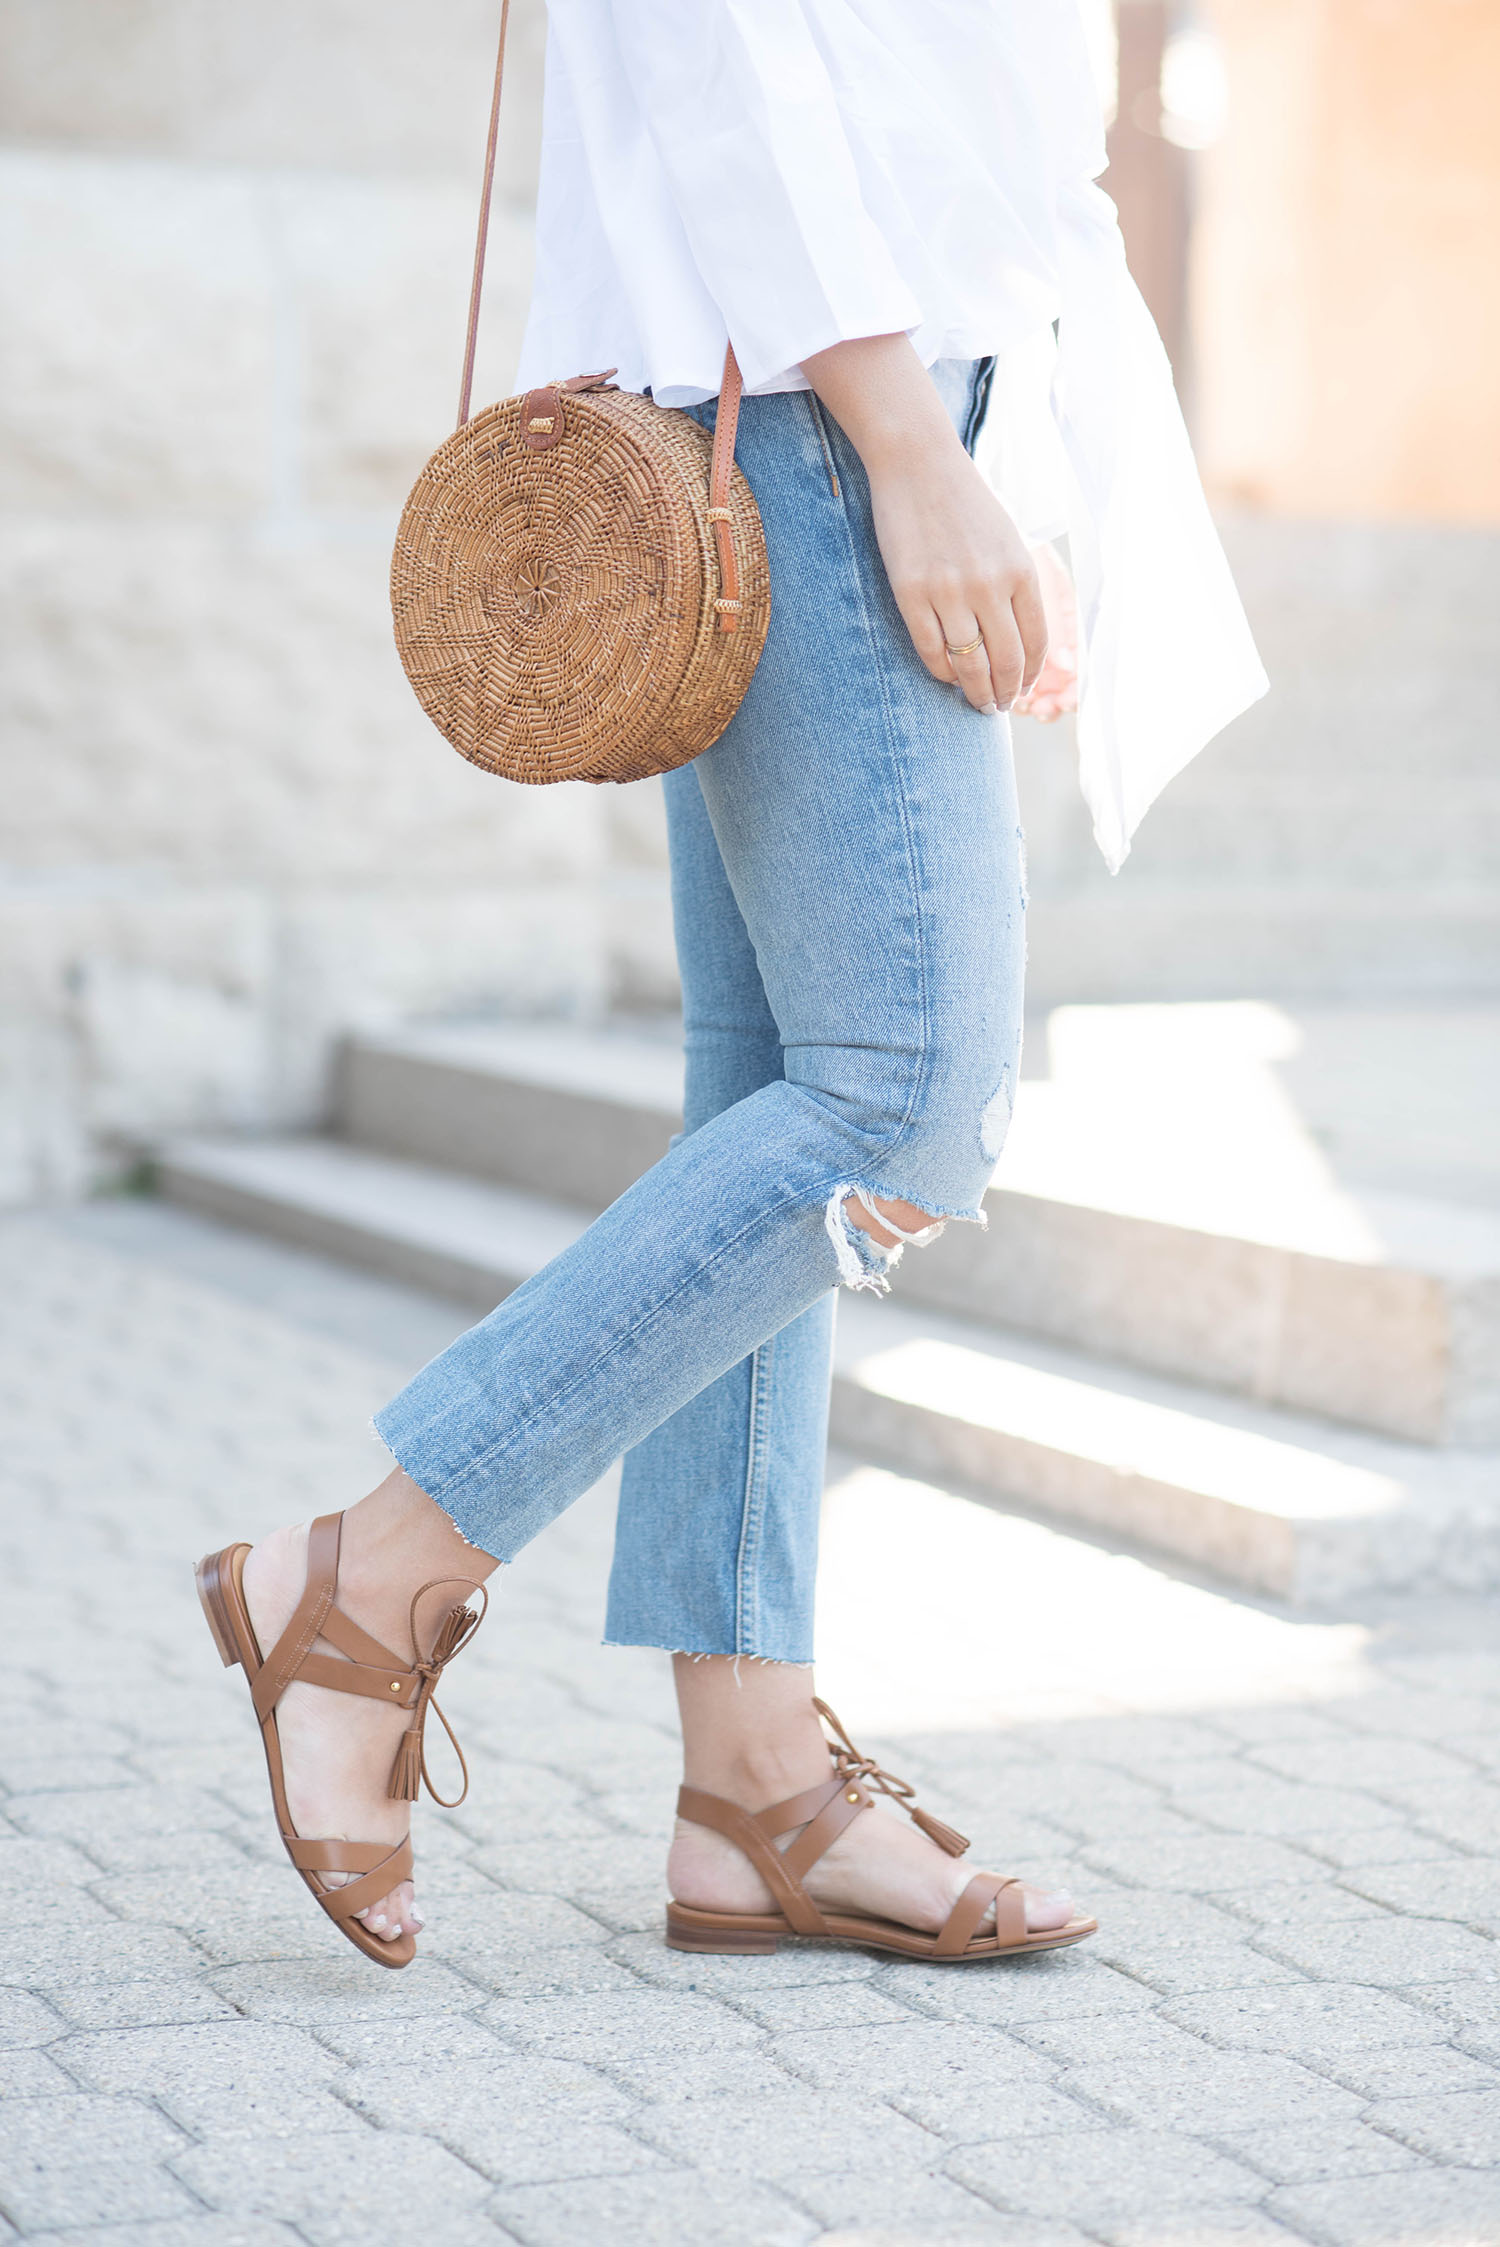 Outfit details on Winnipeg fashion blogger Cee Fardoe of Coco & Vera, including Sezane leather sandals, Grlfrnd Karolina blue jeans and an Ellen James rattan bag